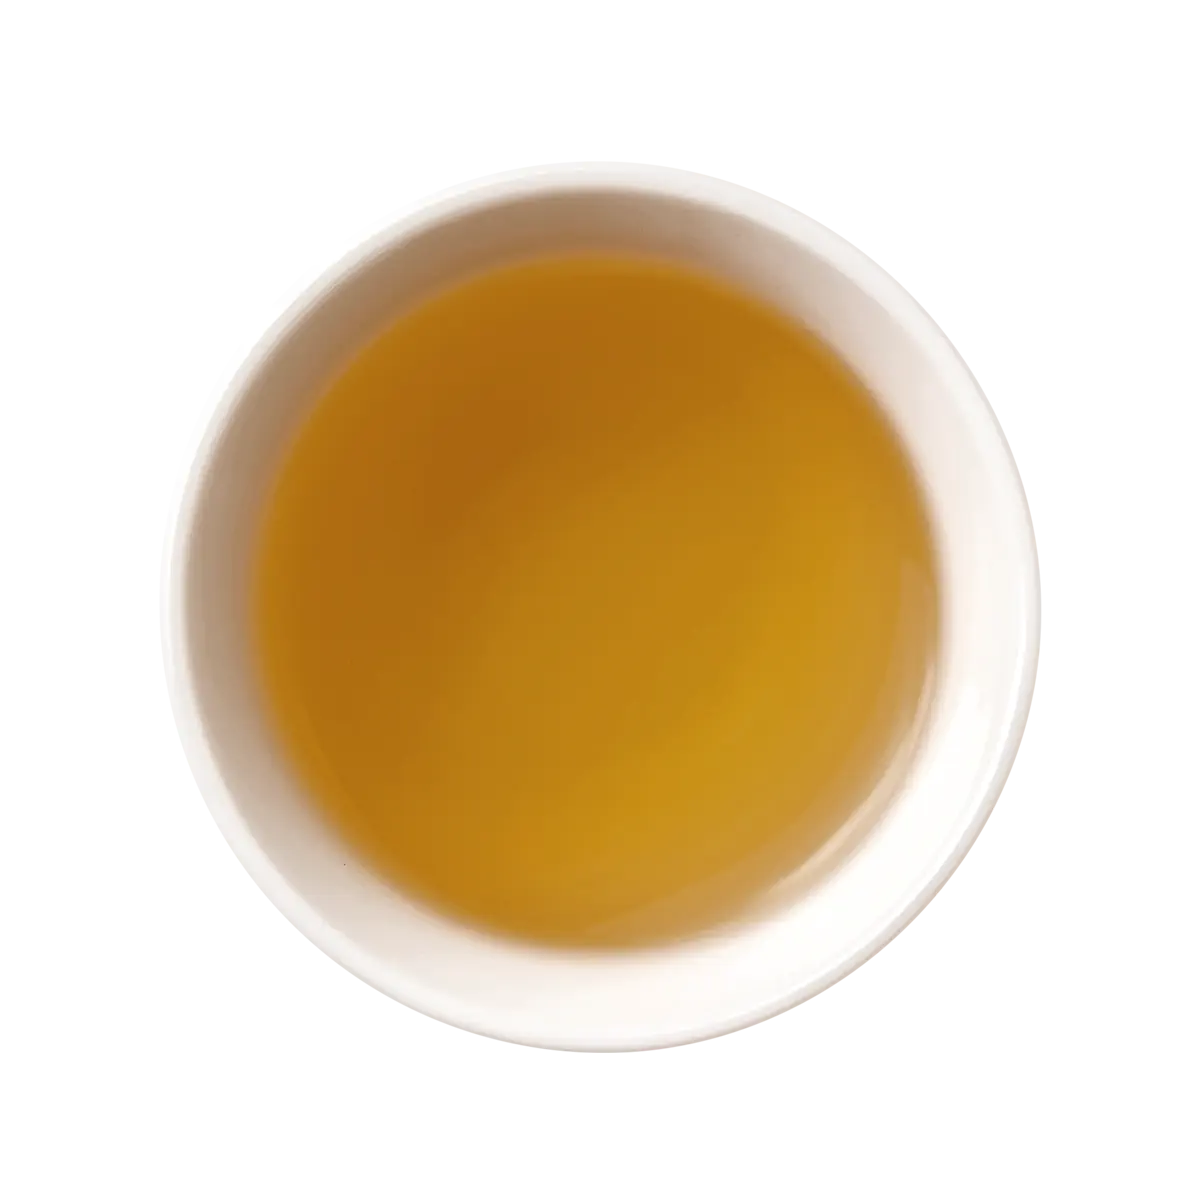 【 HOT BREW 】No.5紅玉紅茶(ルビー紅茶)30包入り